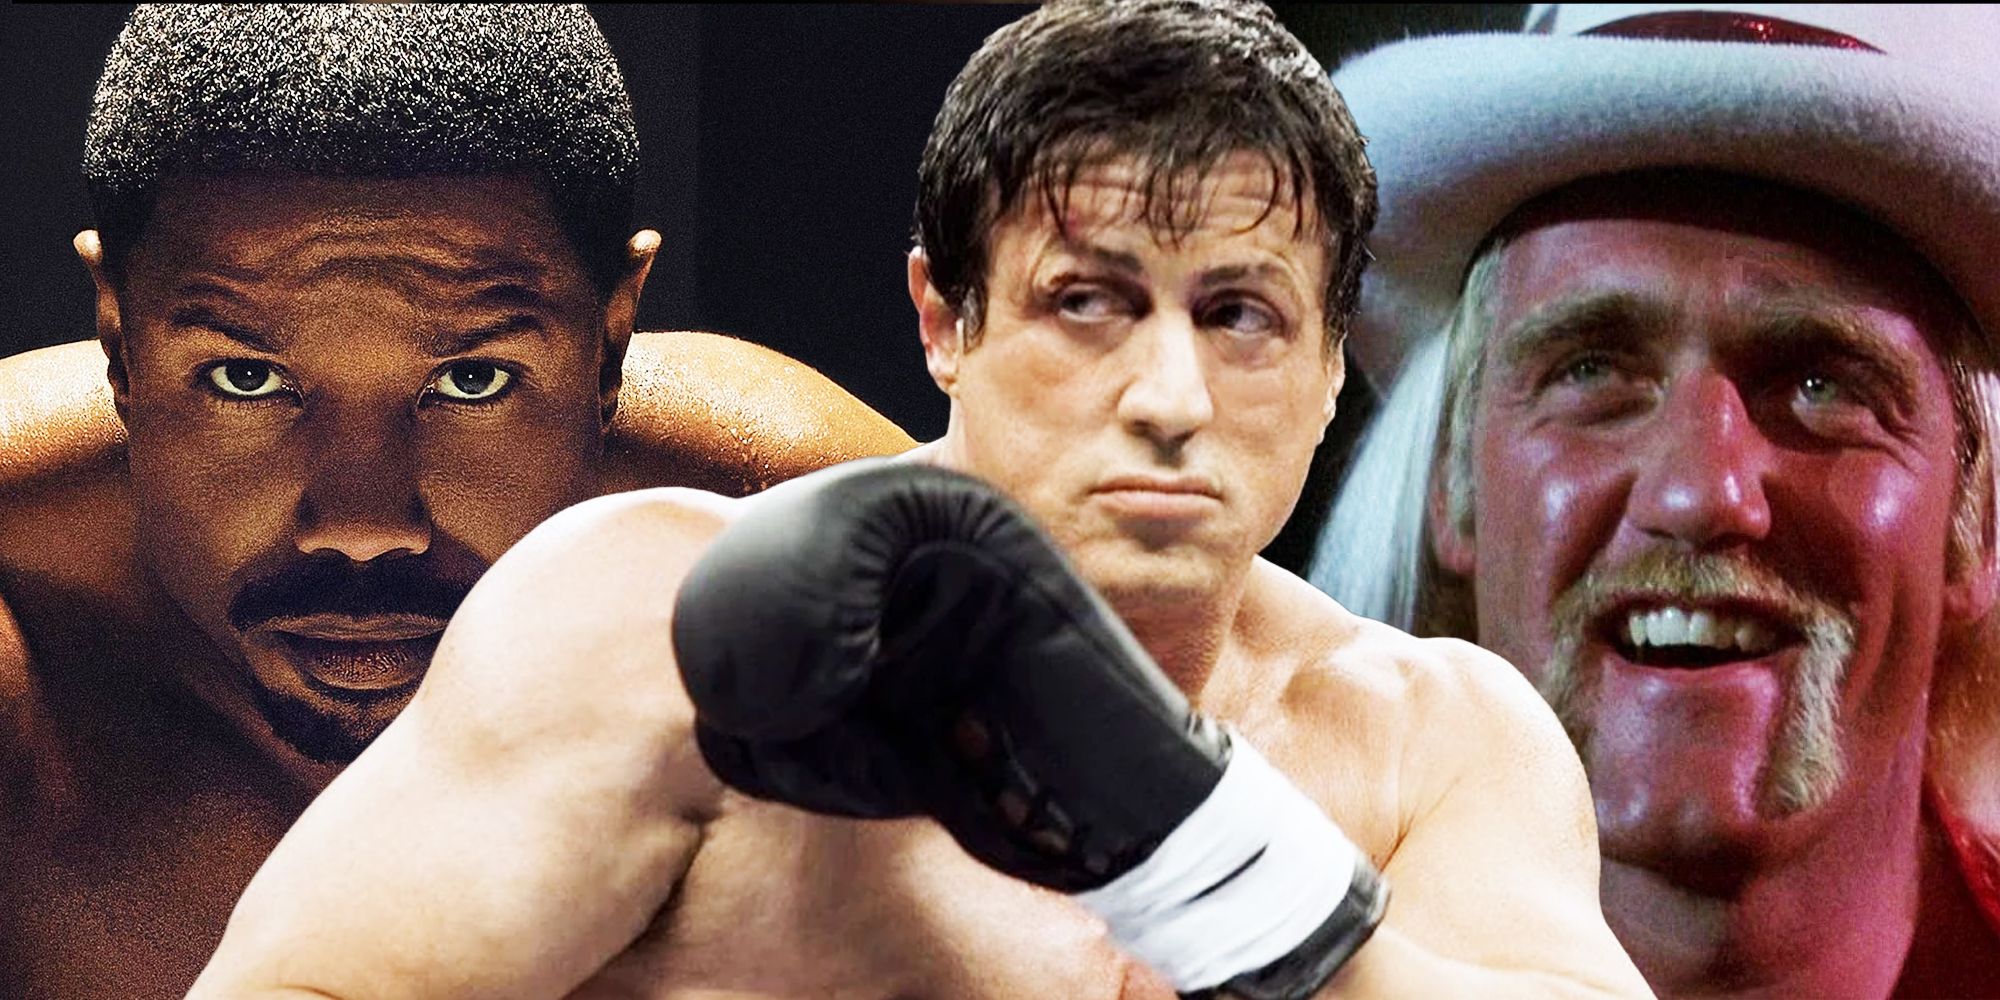 Rocky Balboa, Adonis Creed, and Thunderlips